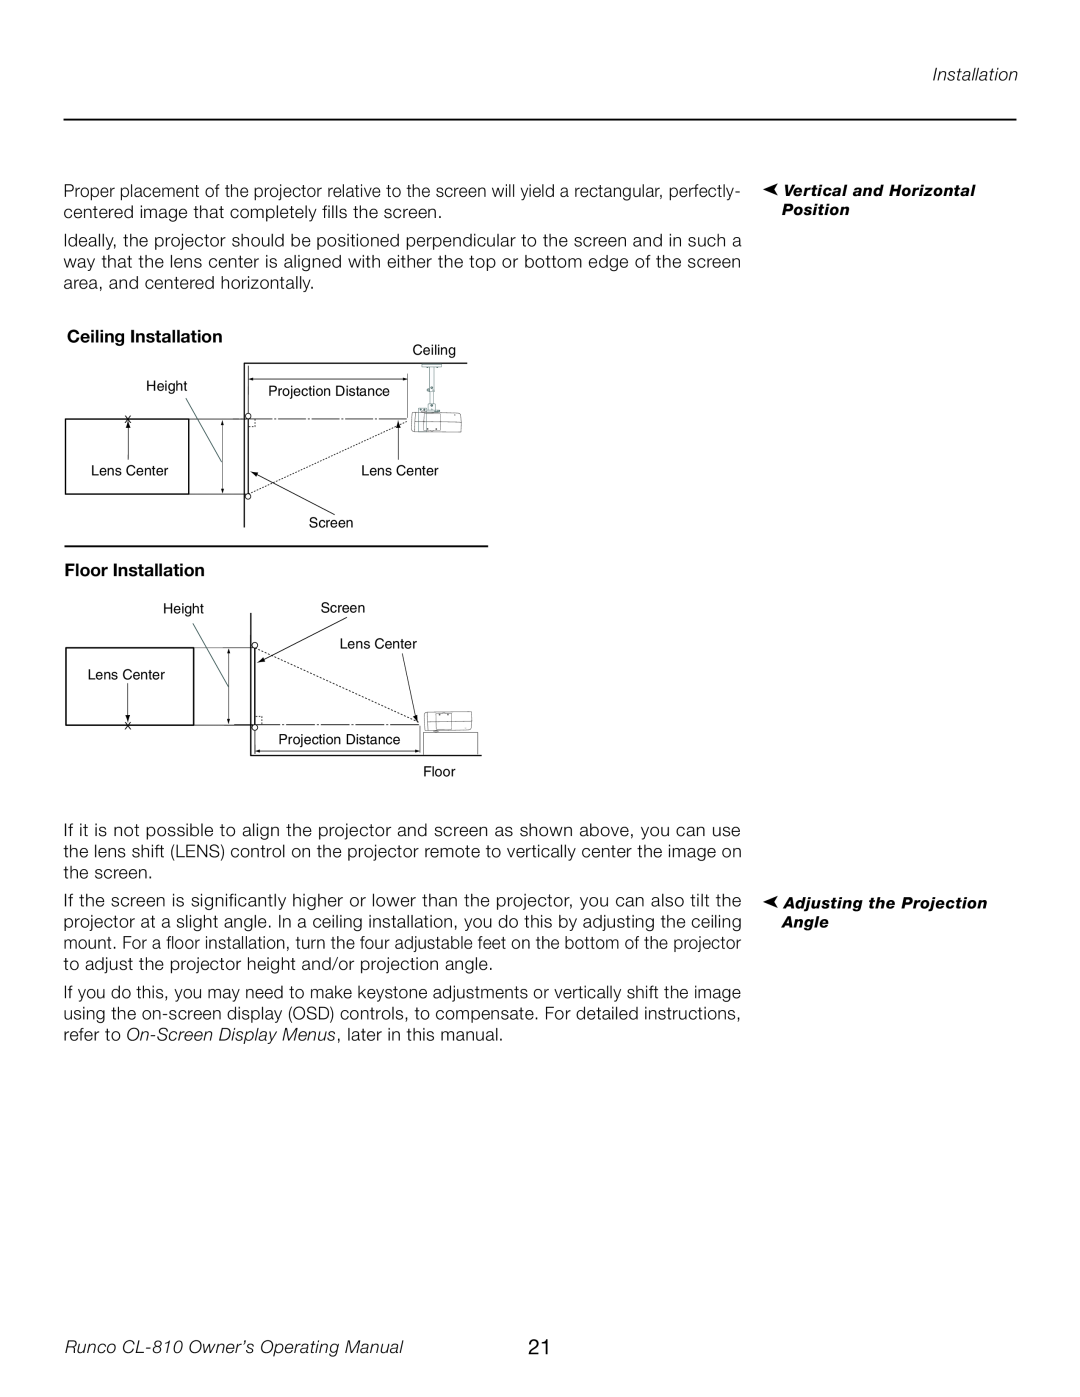 Runco manual Ceiling Installation, Floor Installation, Runco CL-810 Owner’s Operating Manual 